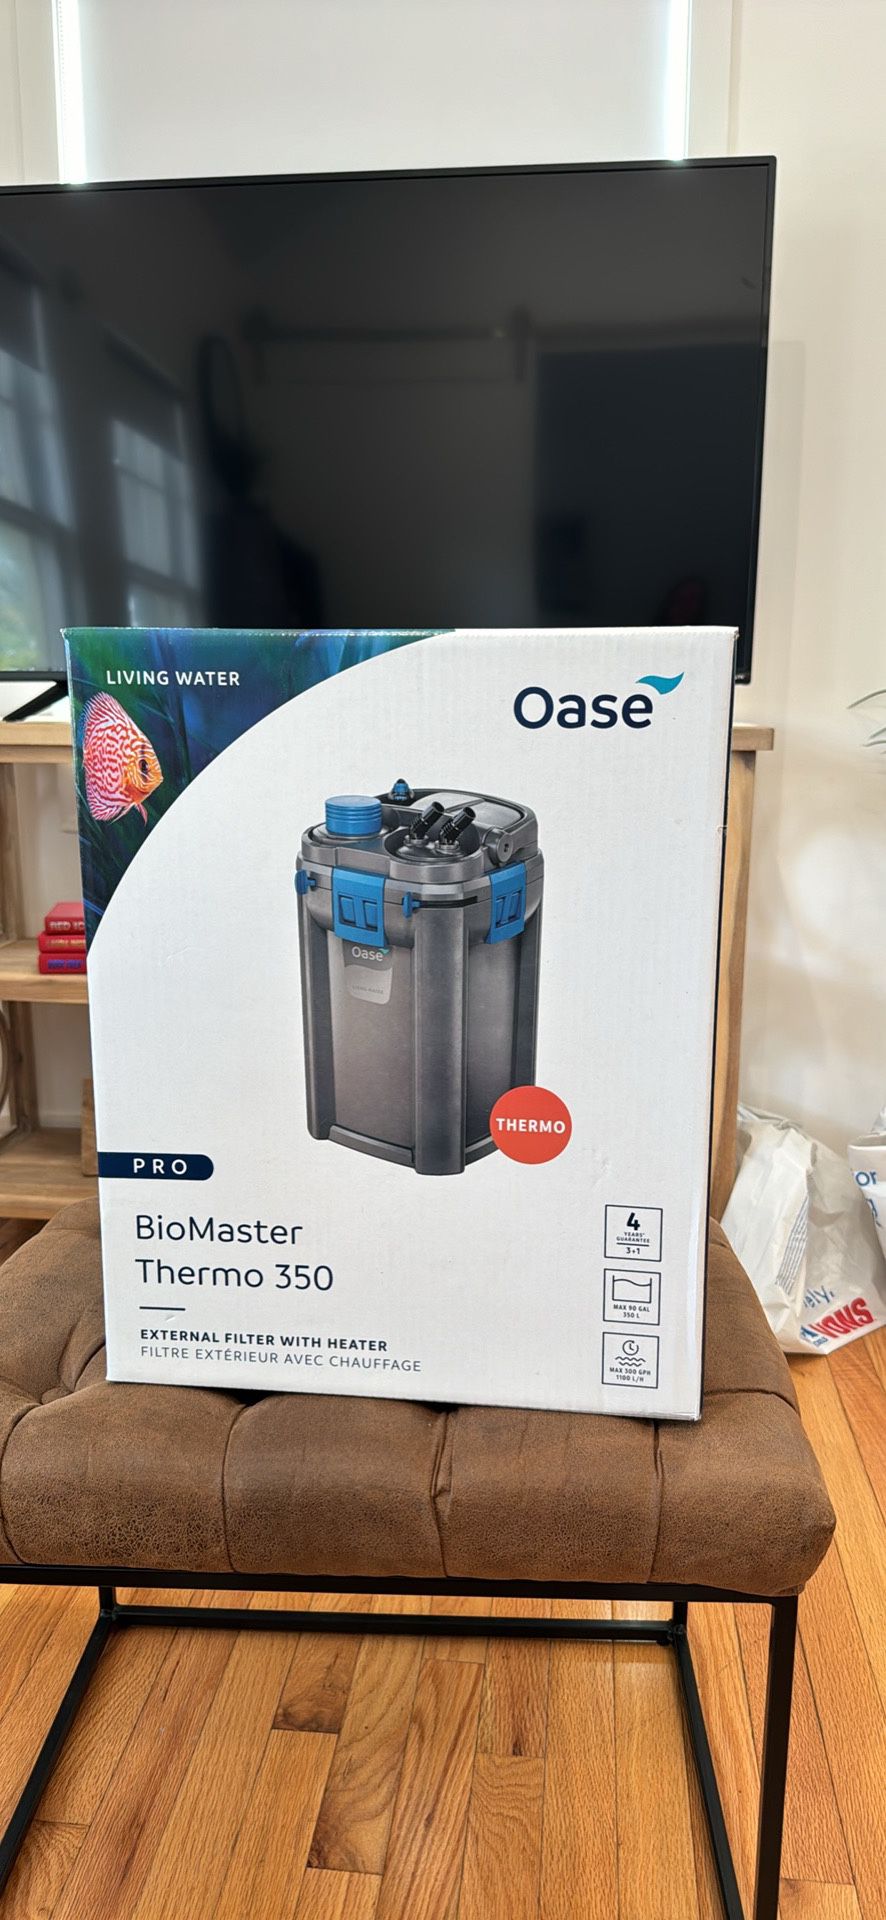 Oase Biomaster Thermo 350